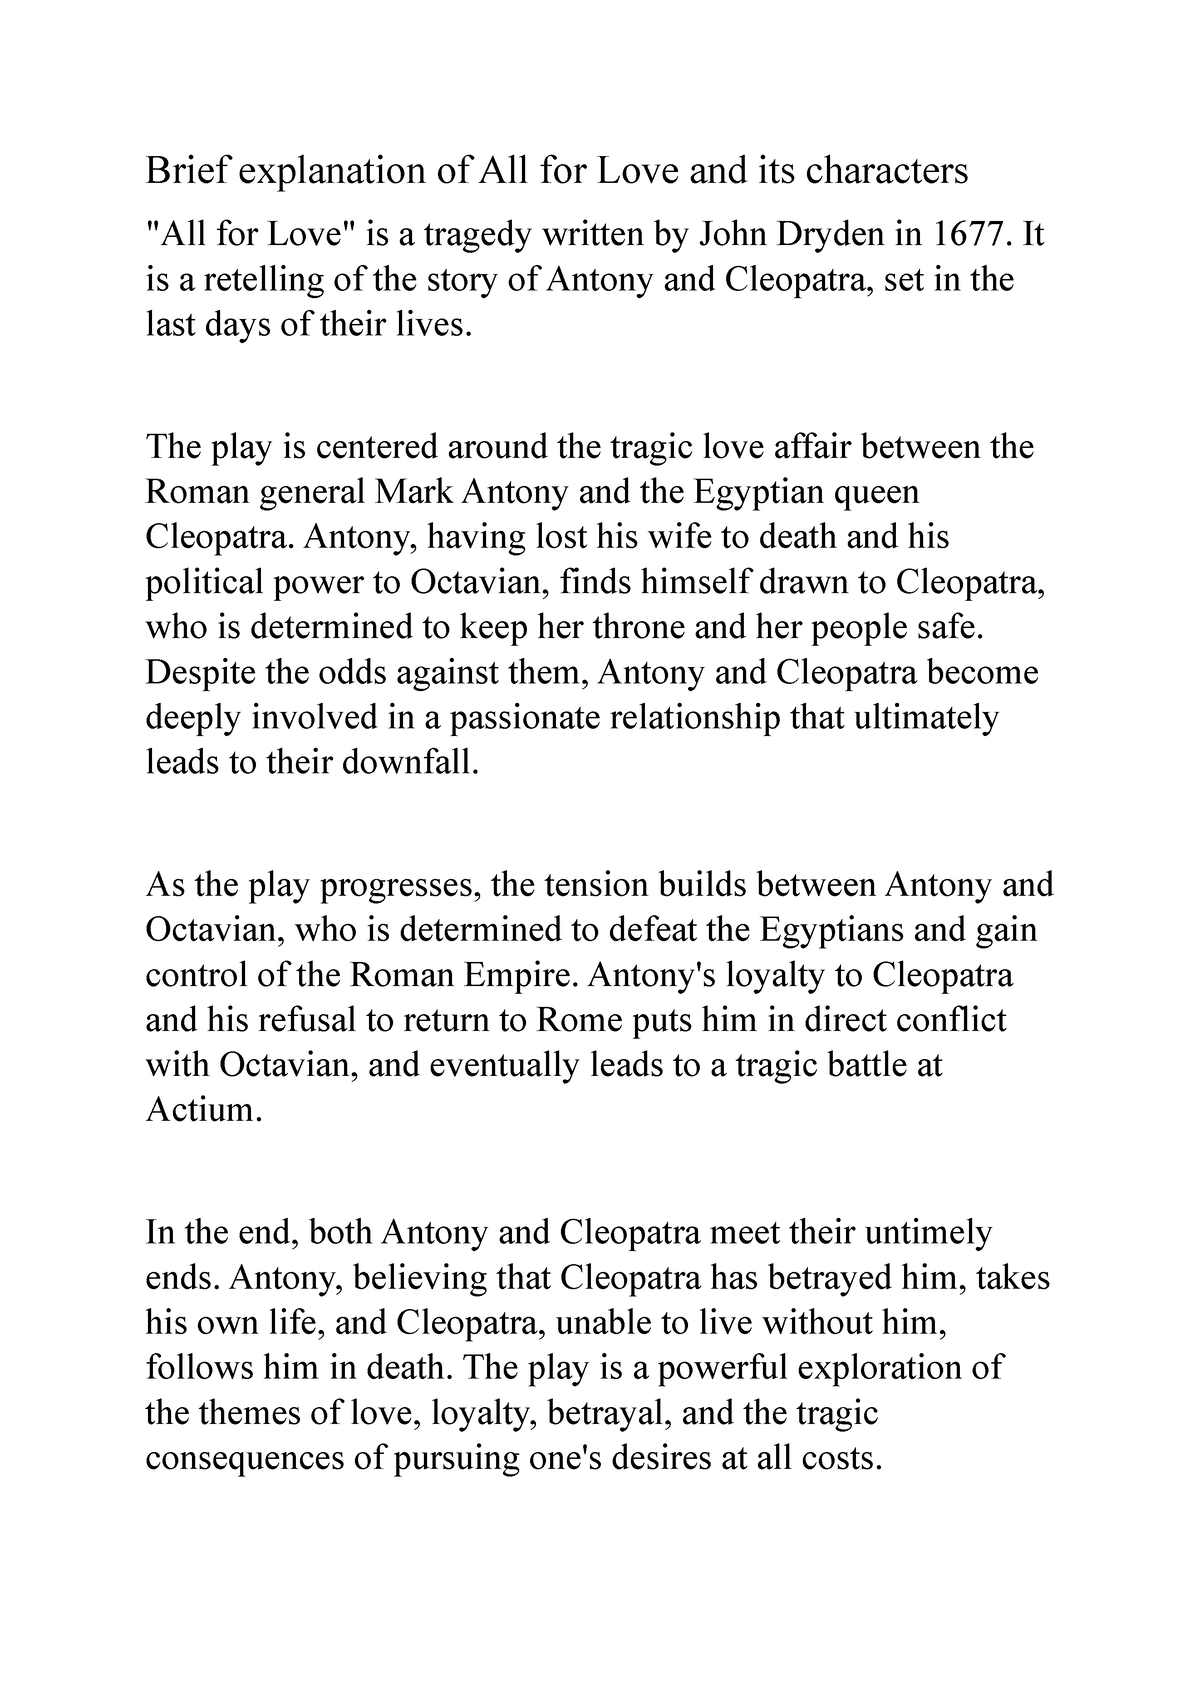 Antony and Cleopatra - Shakespeare by Alexander Dumitru